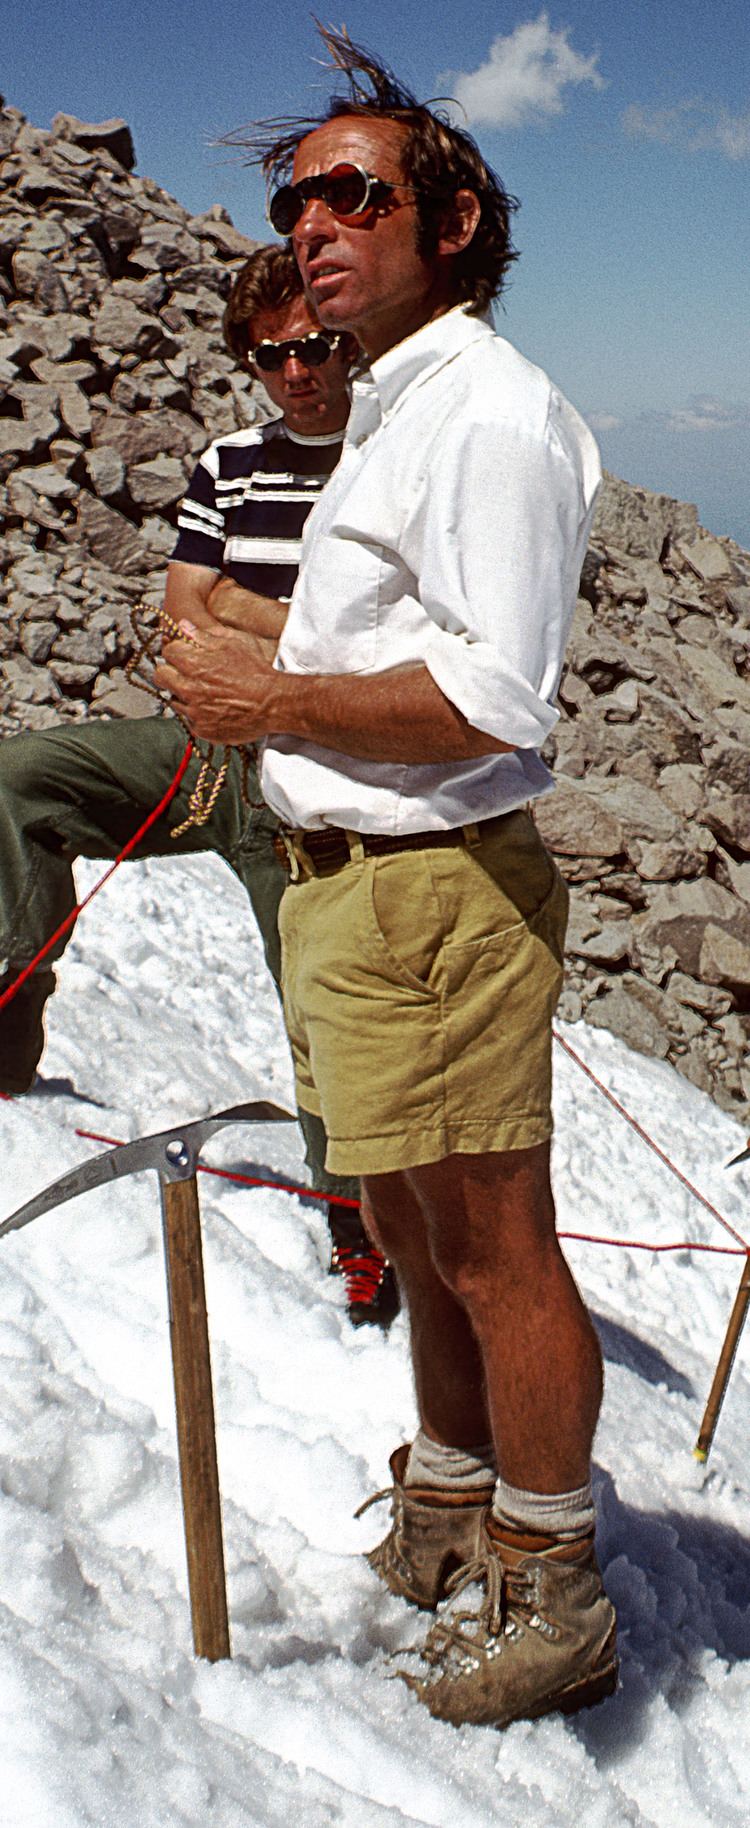 Yvon Chouinard Yvon Chouinard Wikipedia the free encyclopedia